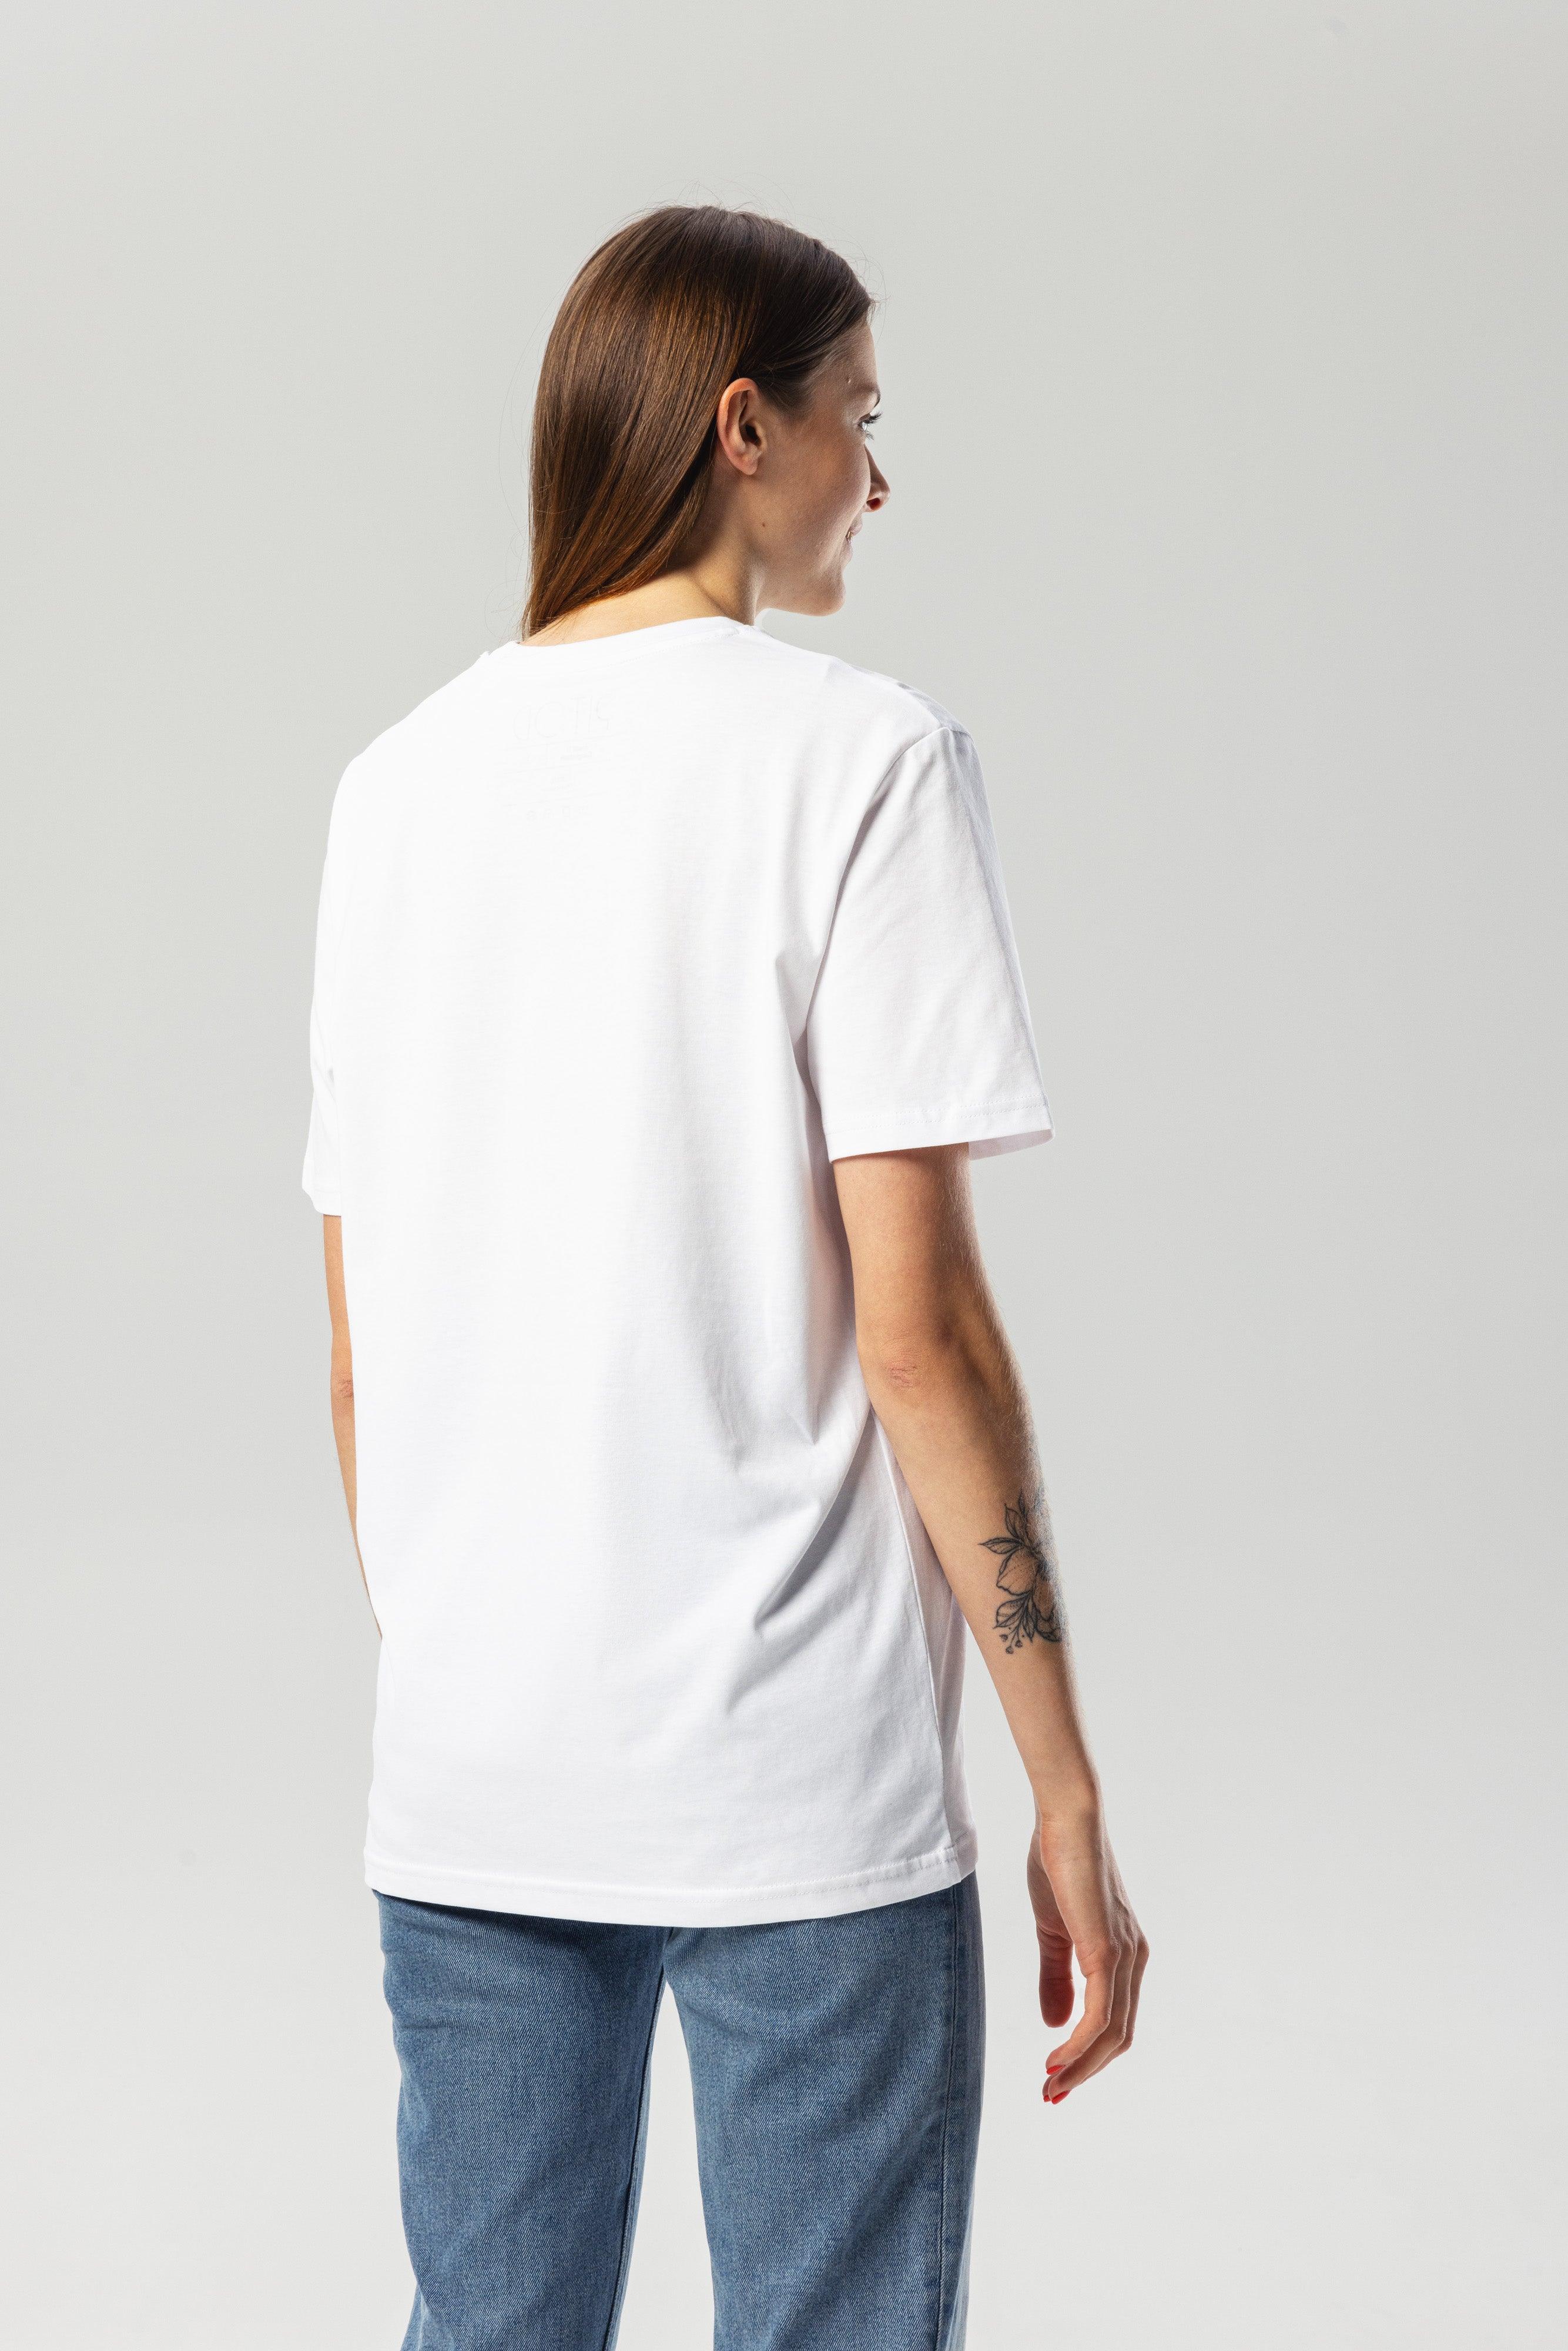 Different T-Shirt | Shirts & Tops | pitod.com